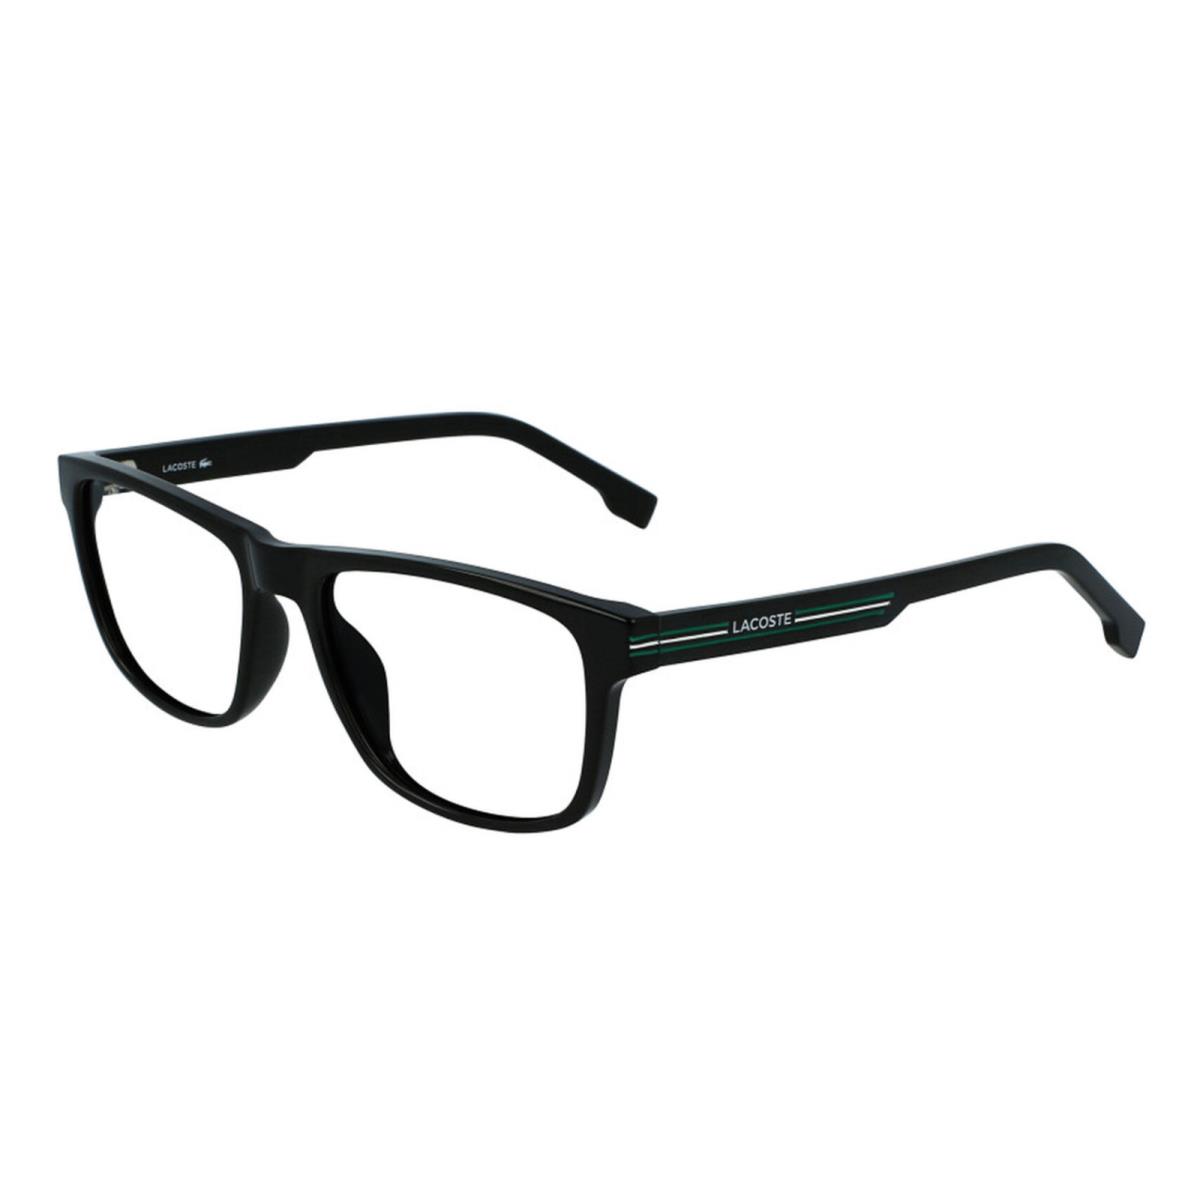 Lacoste Rx-able Eyeglasses L2887 001 54-17 145 Black Rectangular Frames